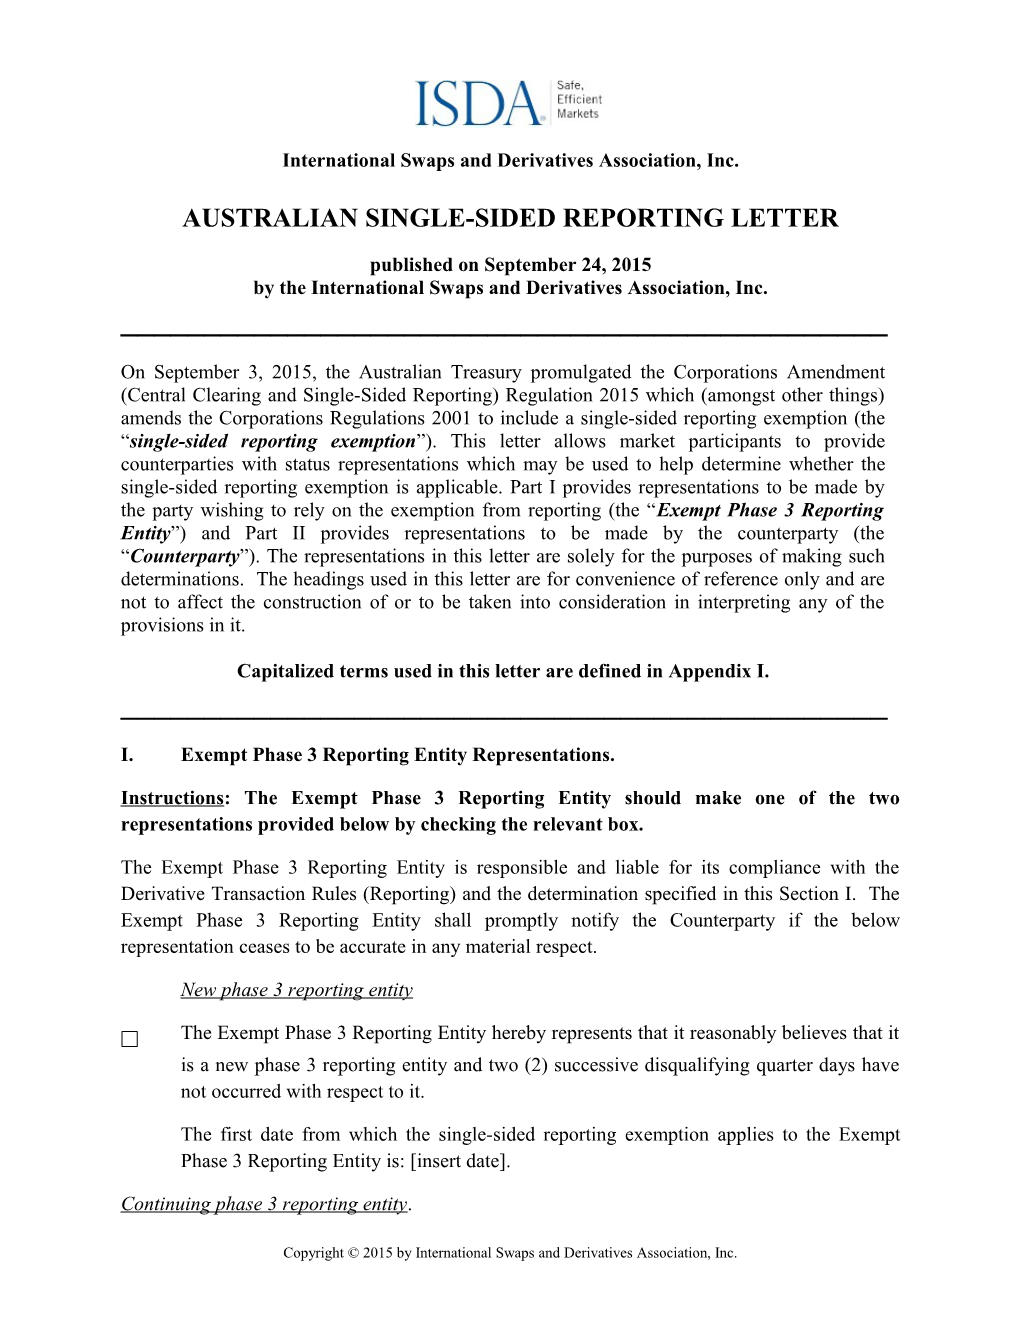 ISDA Australian Single-Sided Reporting Letter